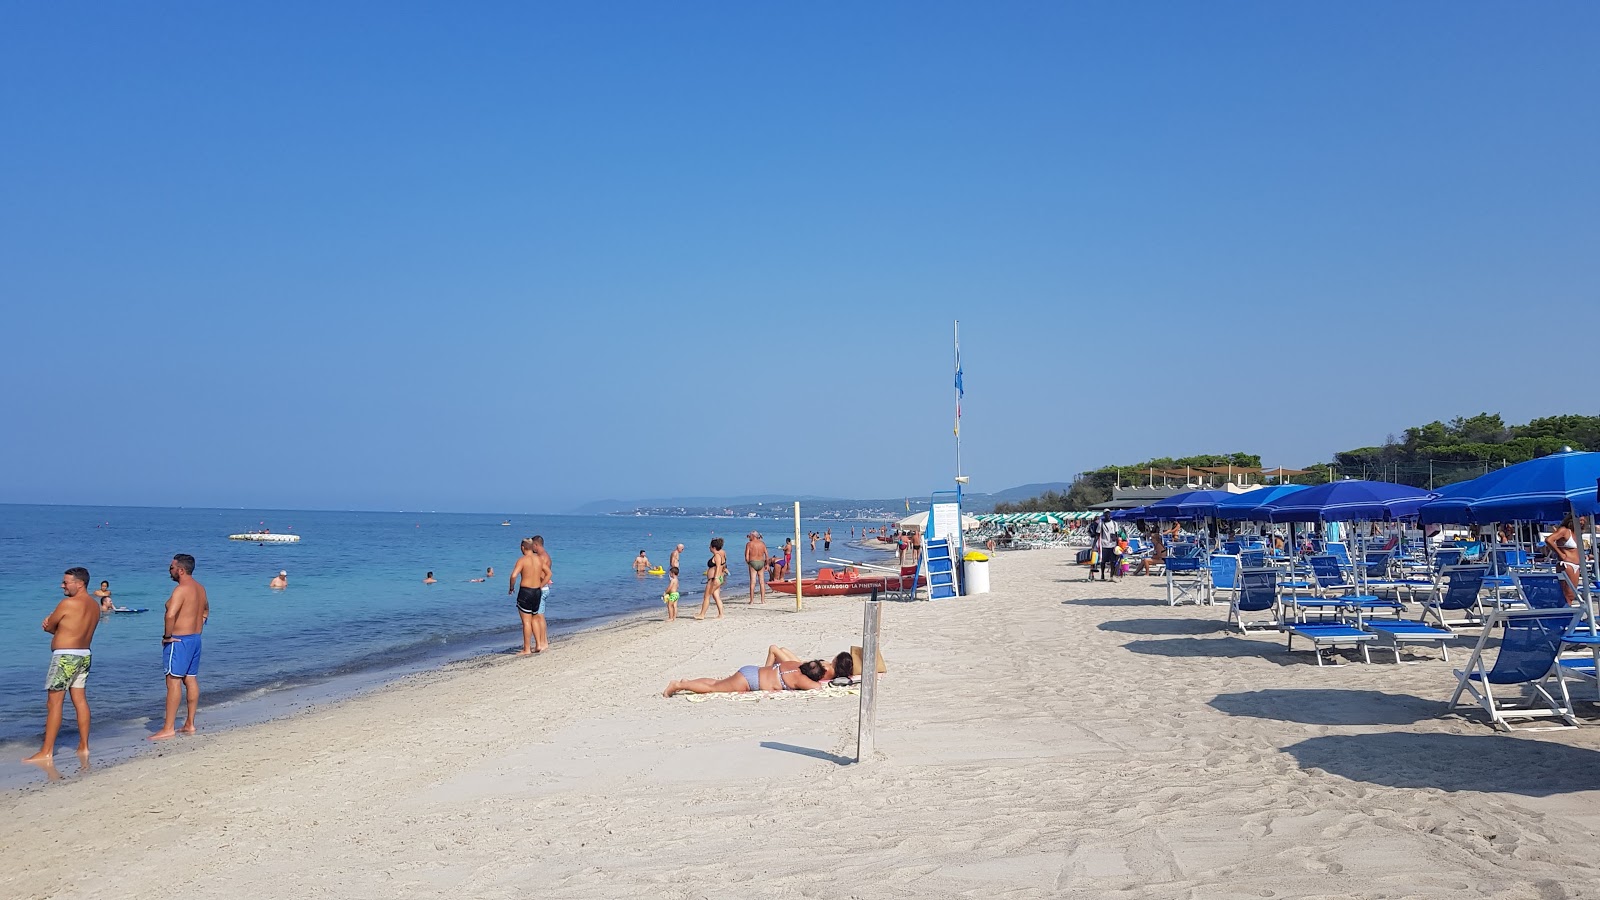 Foto de Spiaggia Pietrabianca con brillante arena fina superficie